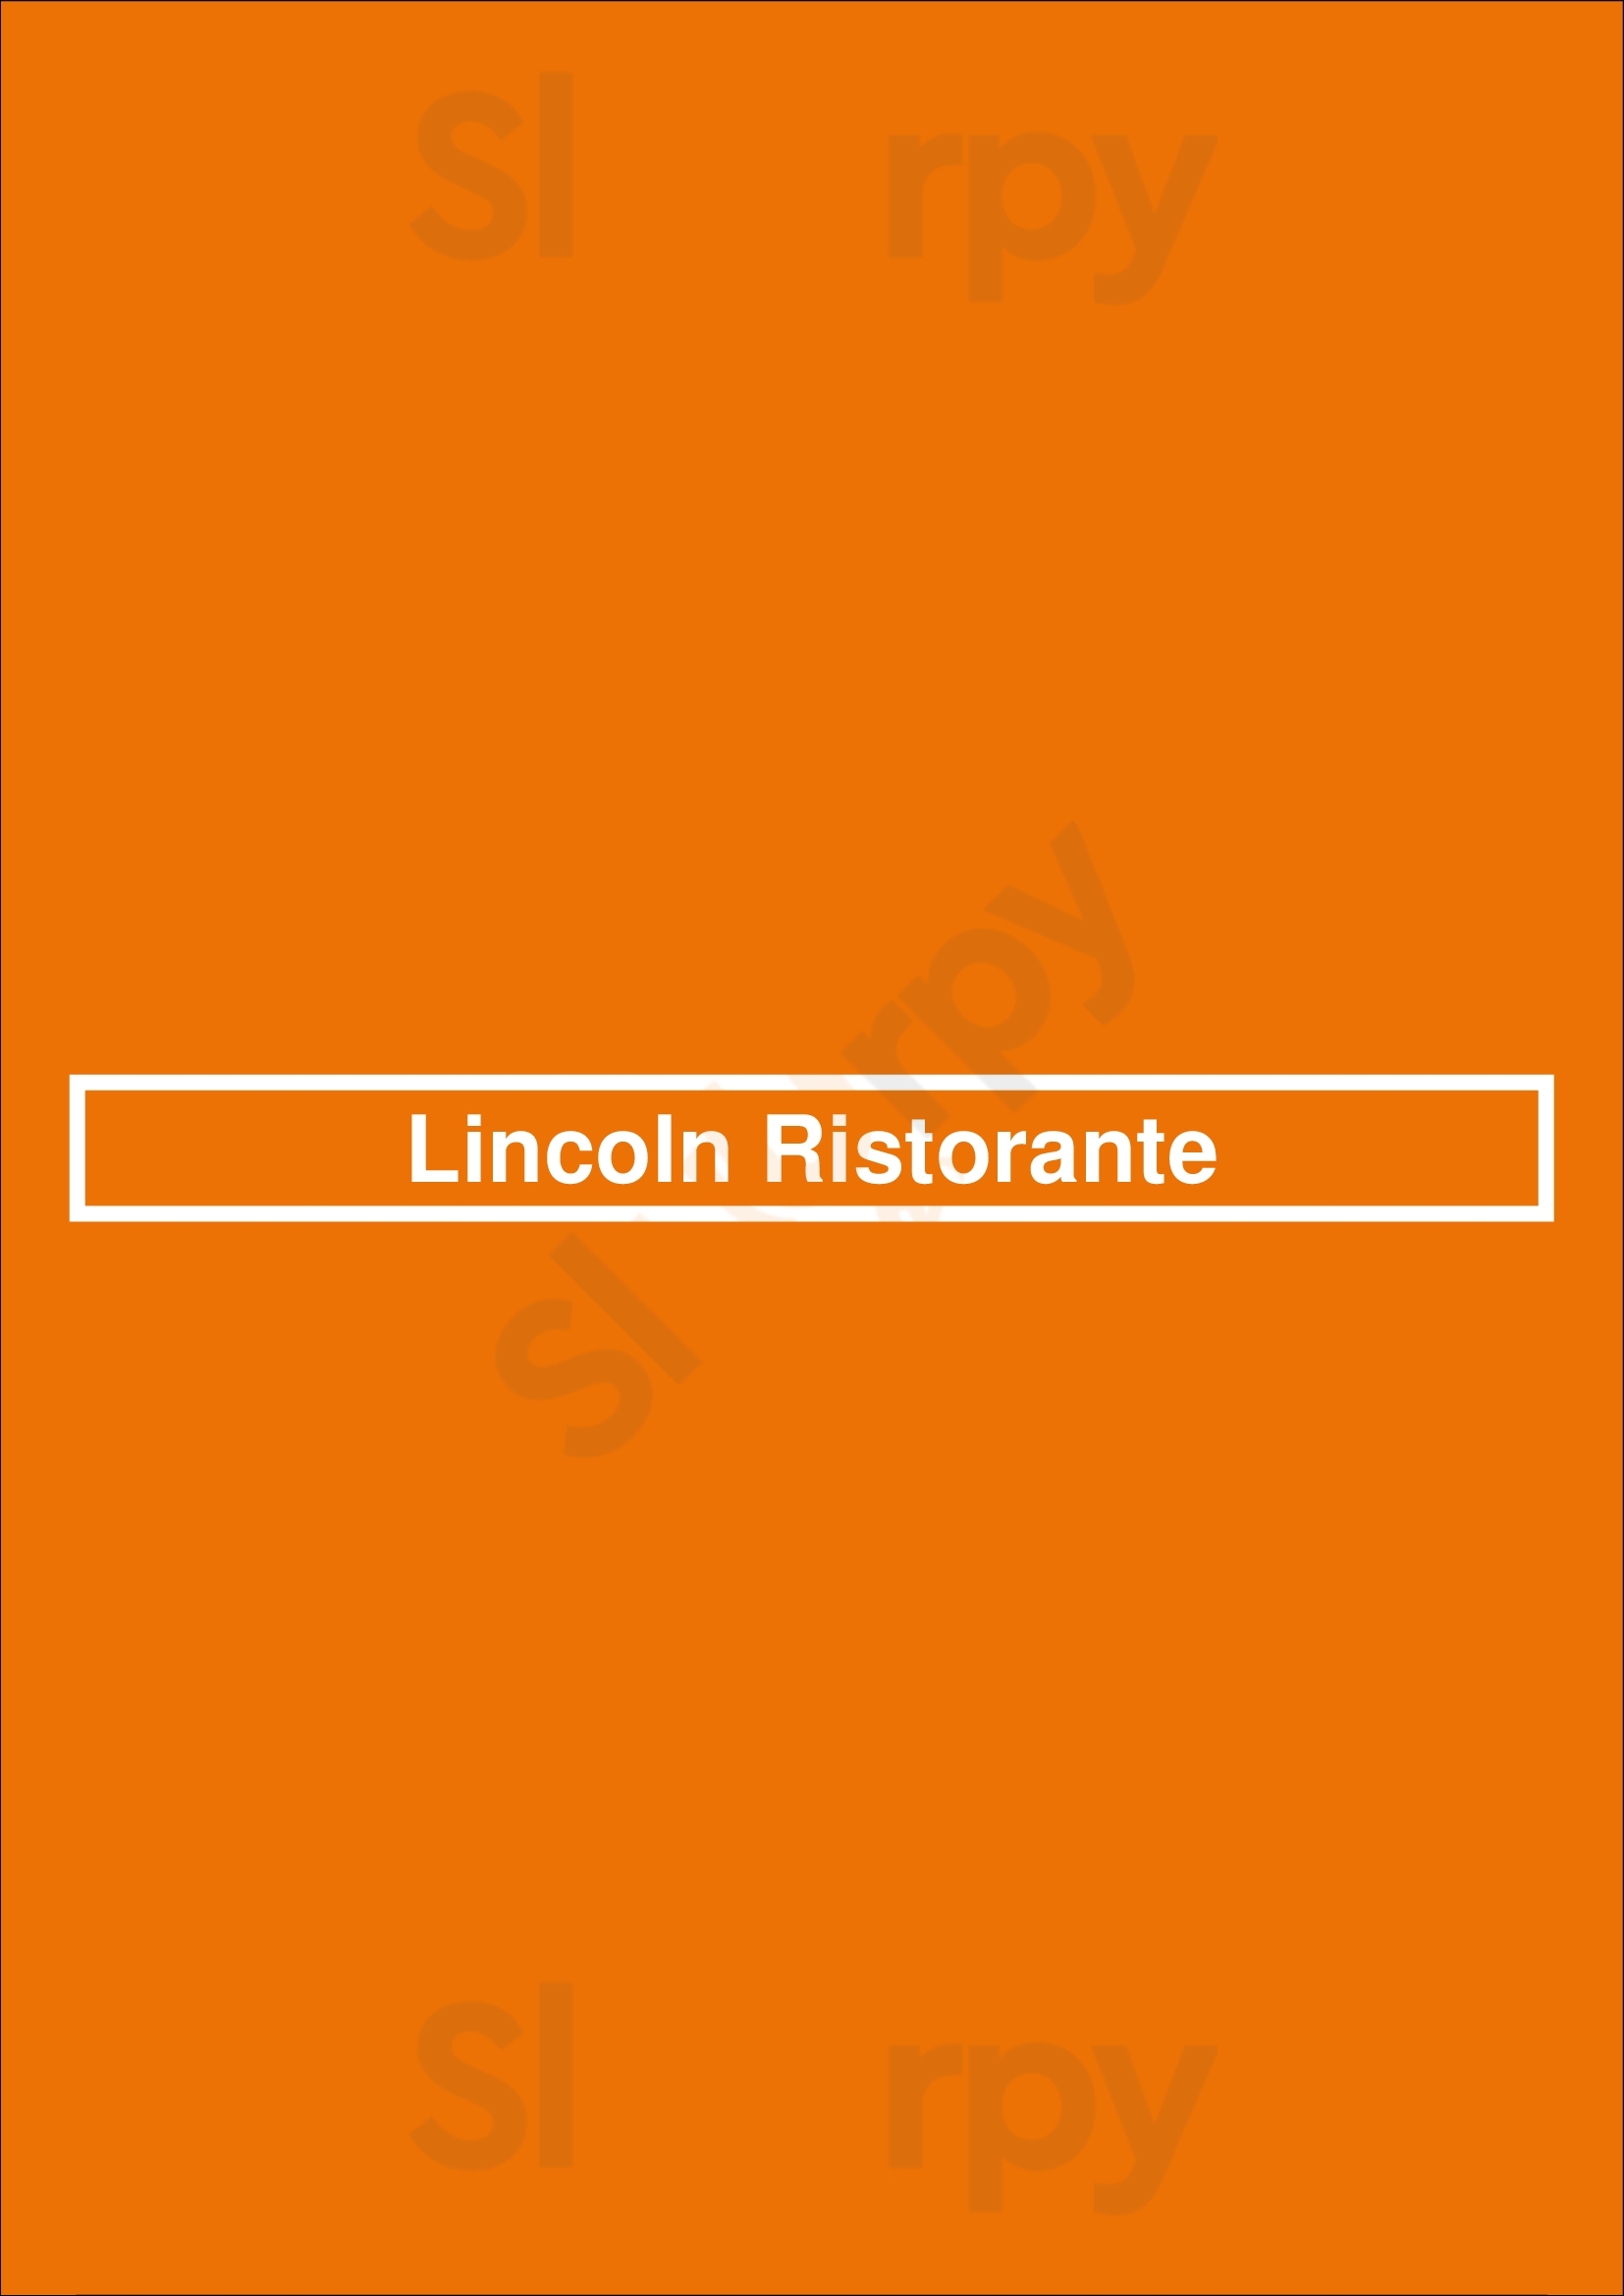 Lincoln Ristorante New York City Menu - 1